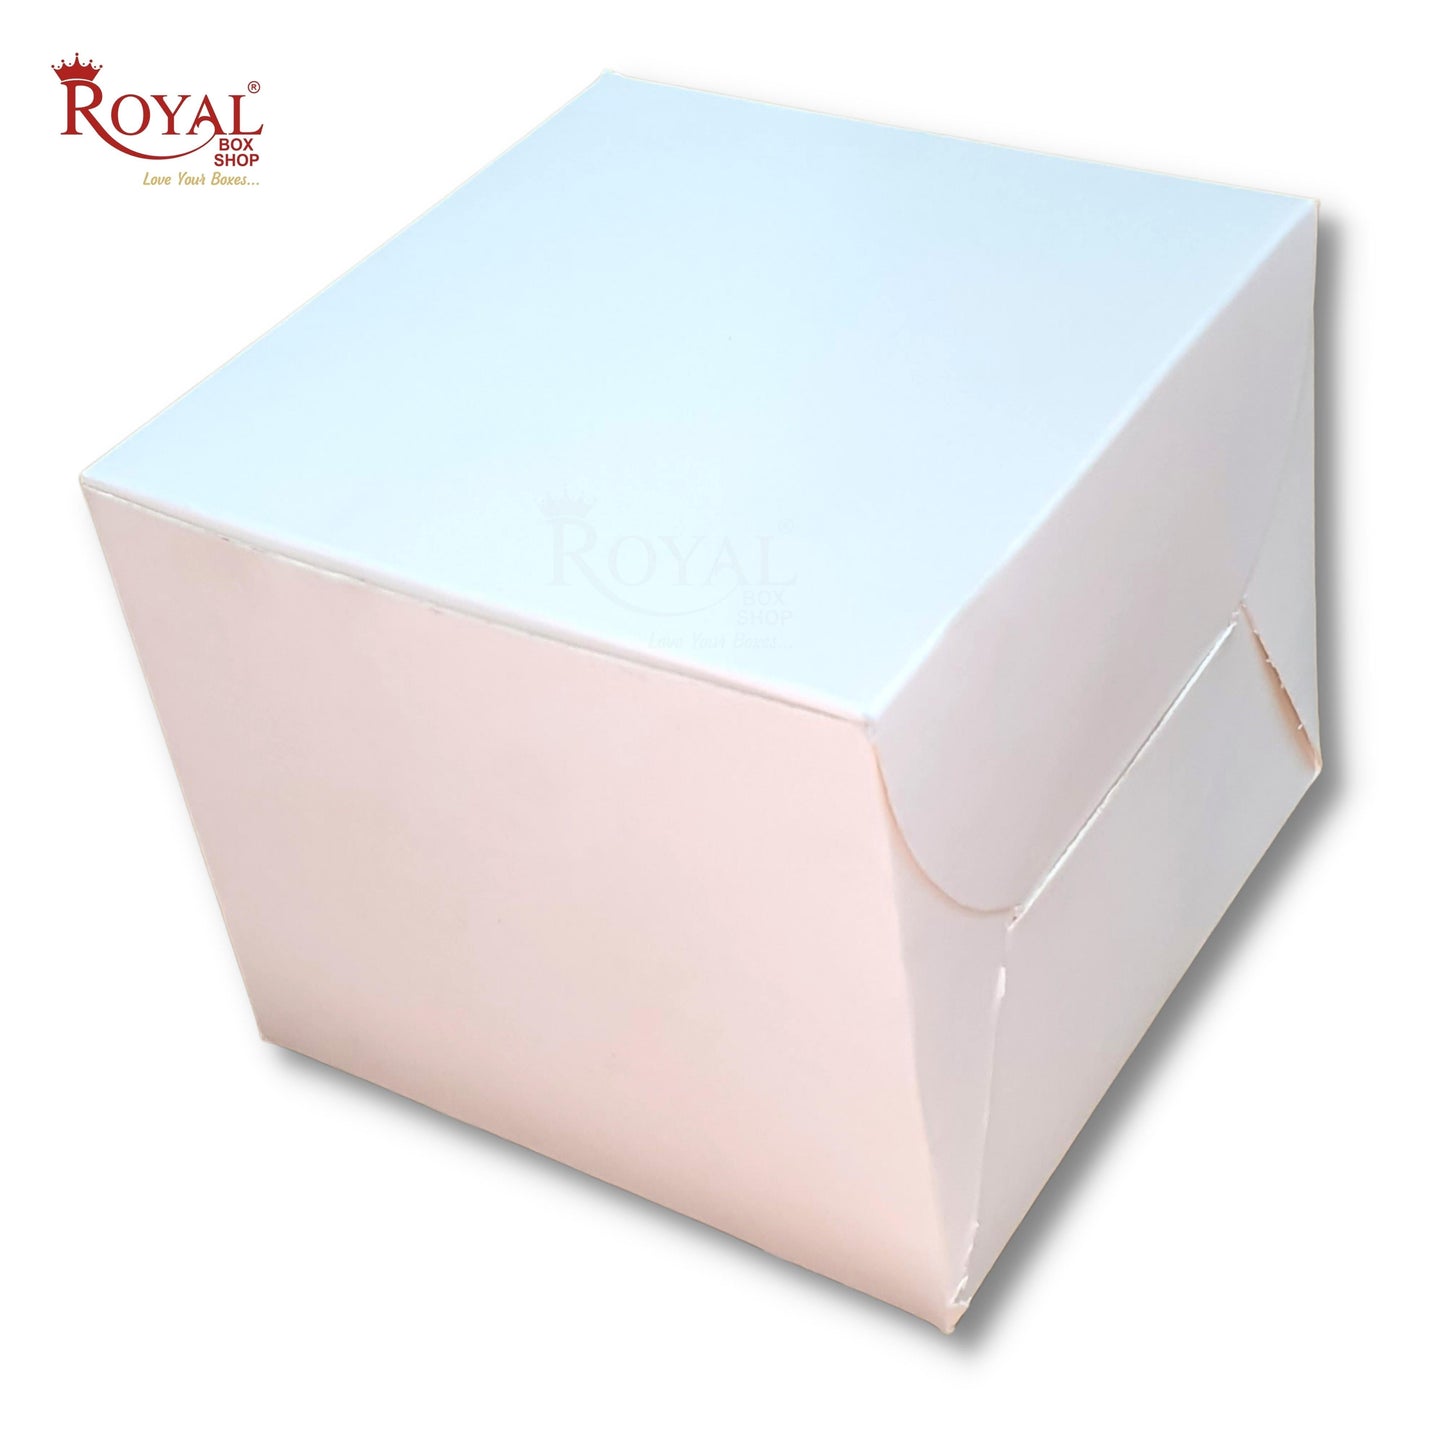 4 Pastry Box I 7x5x3.5 inches I White Color I Mini Cake Boxes I Disposable Cookies Box Royal Box Shop